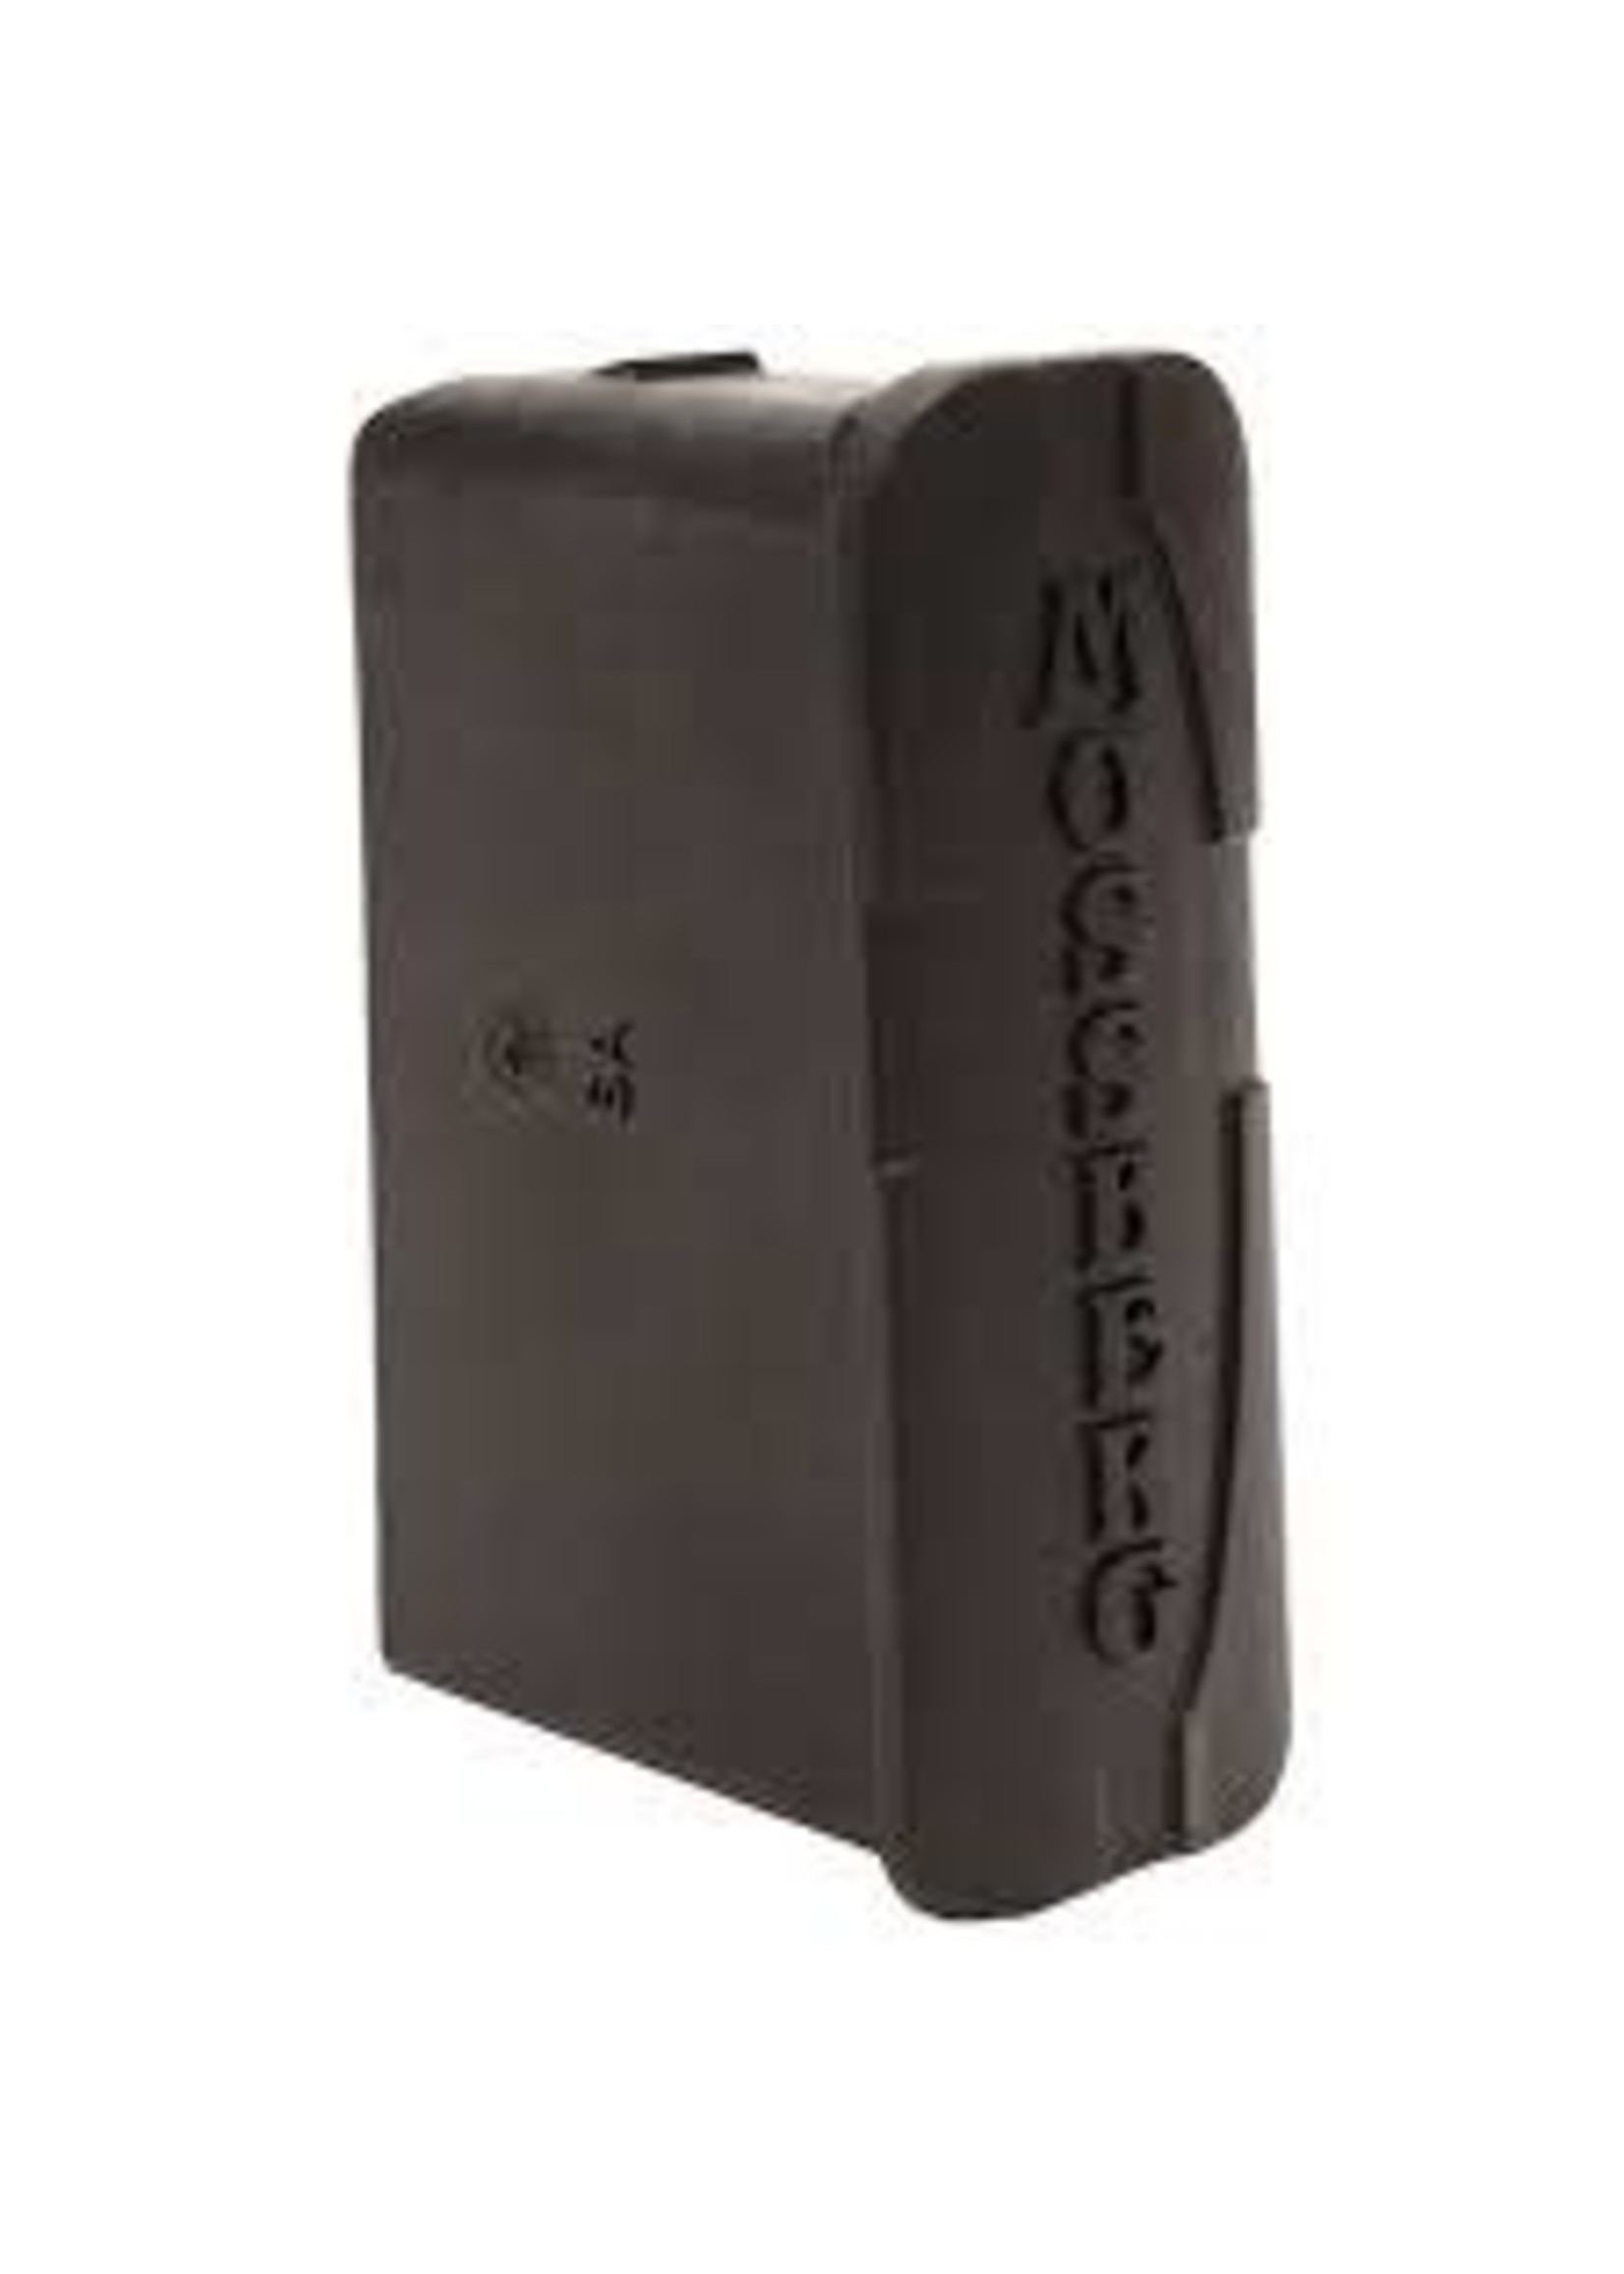 Mossberg MOSSBERG MAGAZINE PATRIOT  243,308,7mm-08,6.5 CREED   5RND